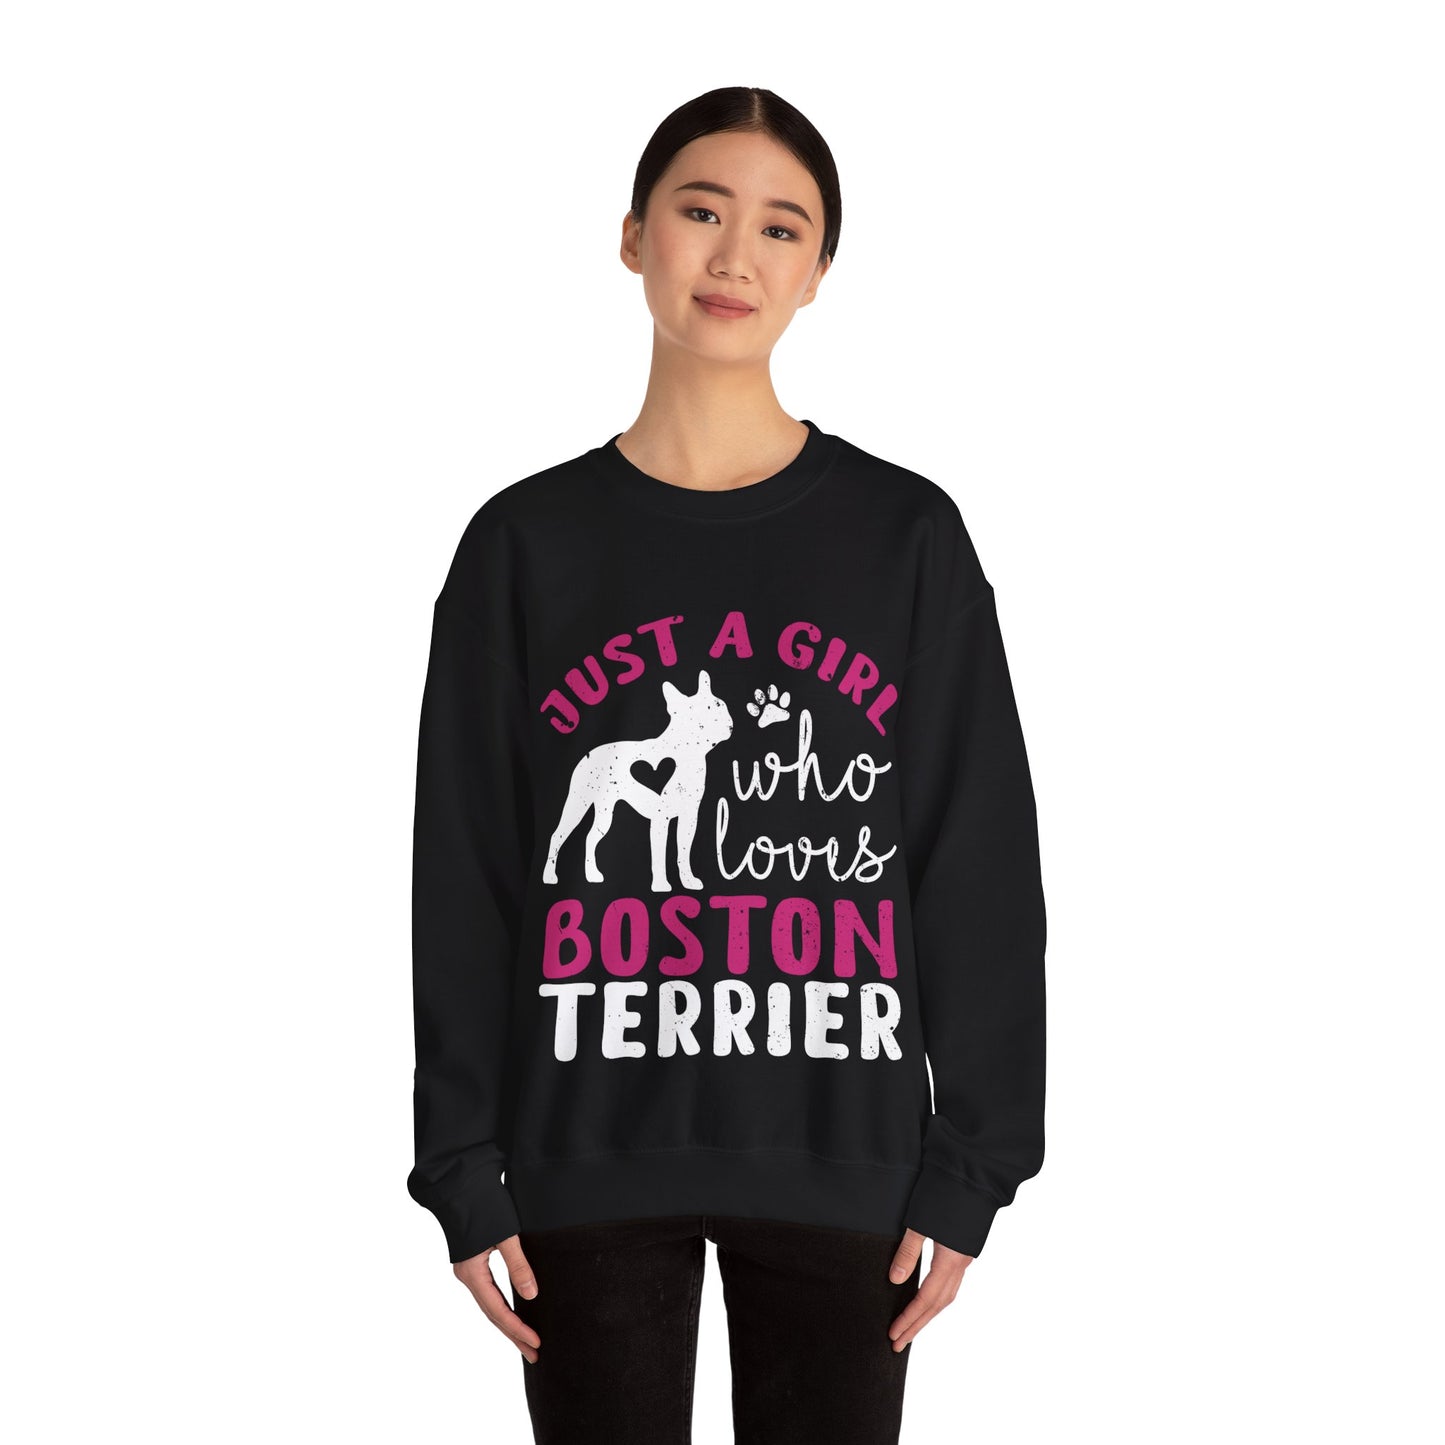 Oreo  - Unisex Sweatshirt for Boston Terrier lovers